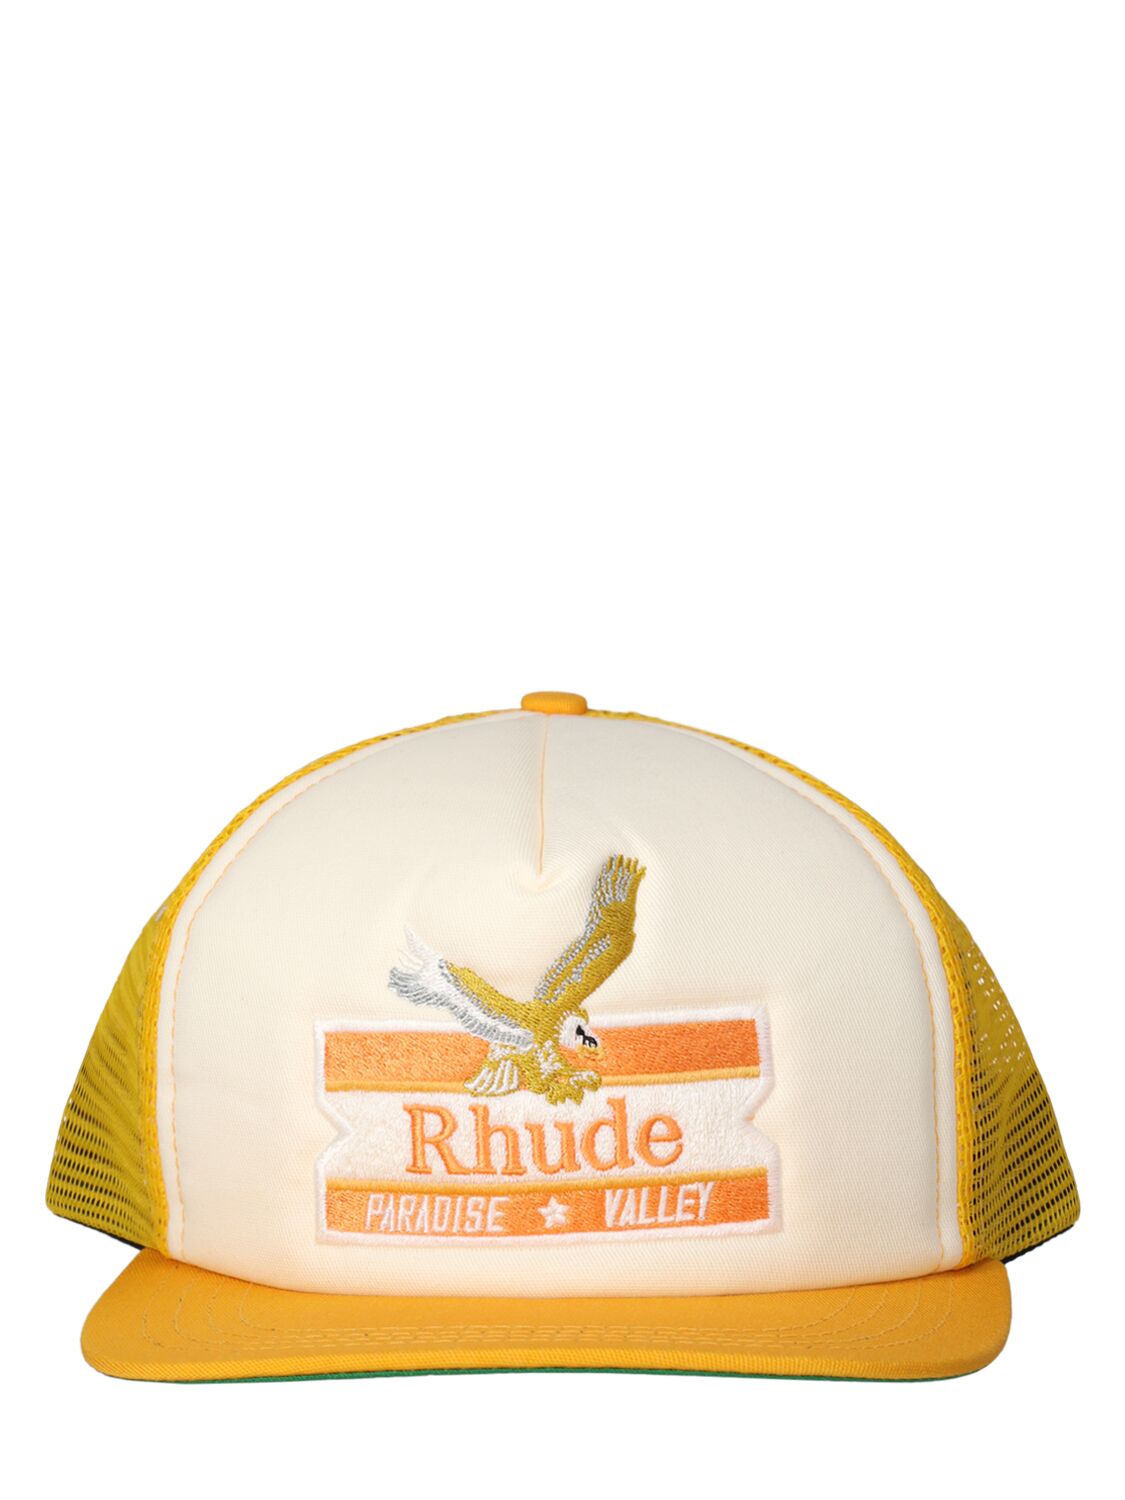 Paradise Valley Cotton Twill Trucker Hat